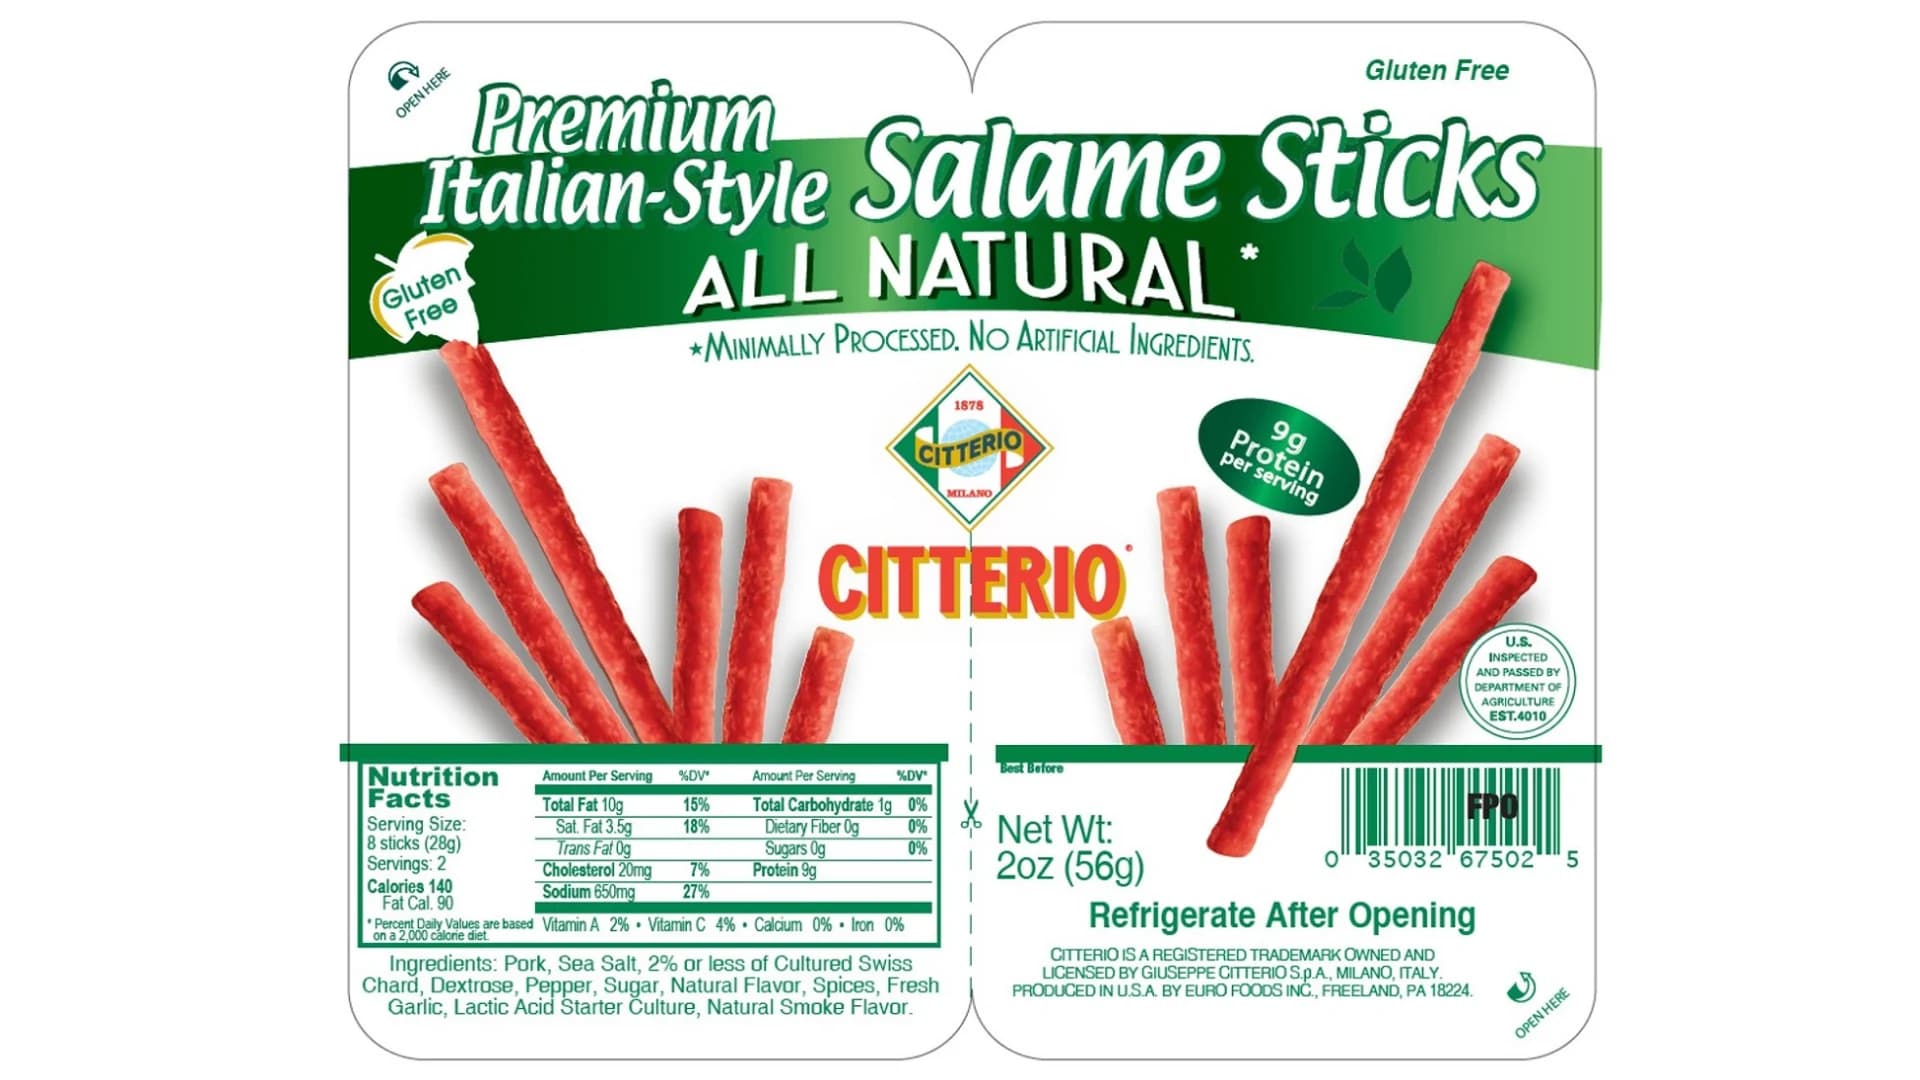 CDC: Salmonella outbreak linked to Citterio ‘Salame Sticks’